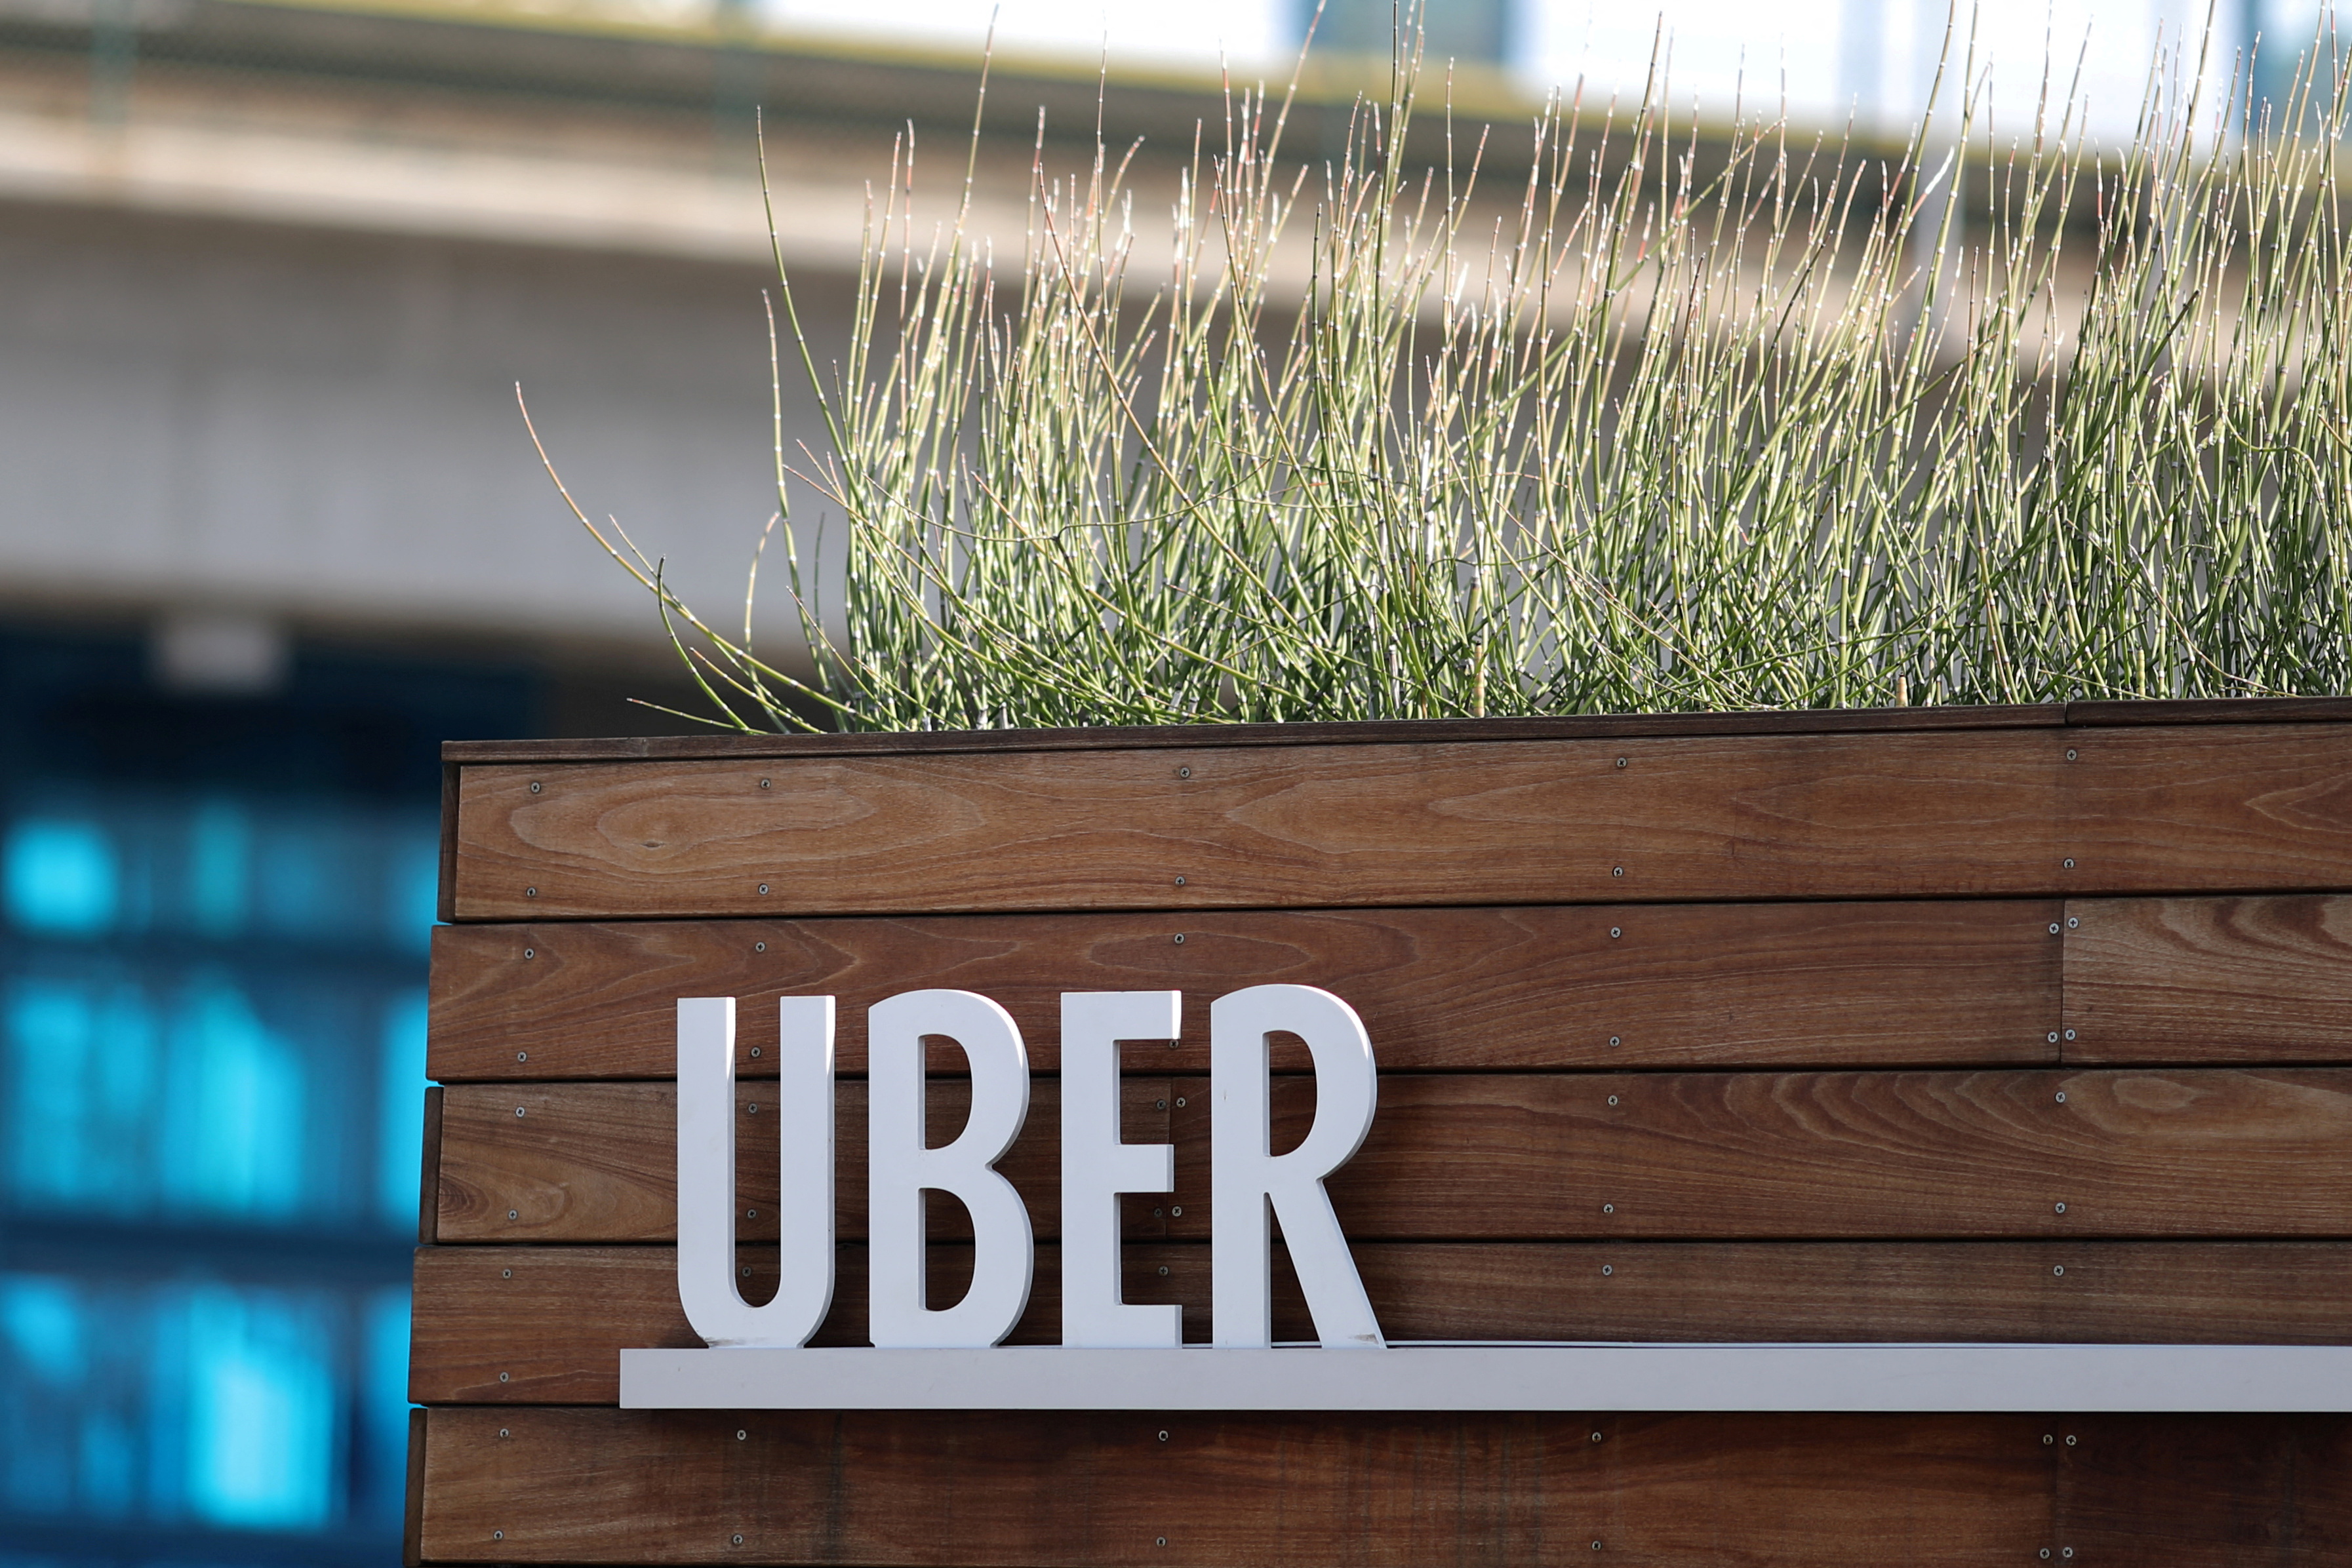 The Uber Hub is seen in Redondo Beach